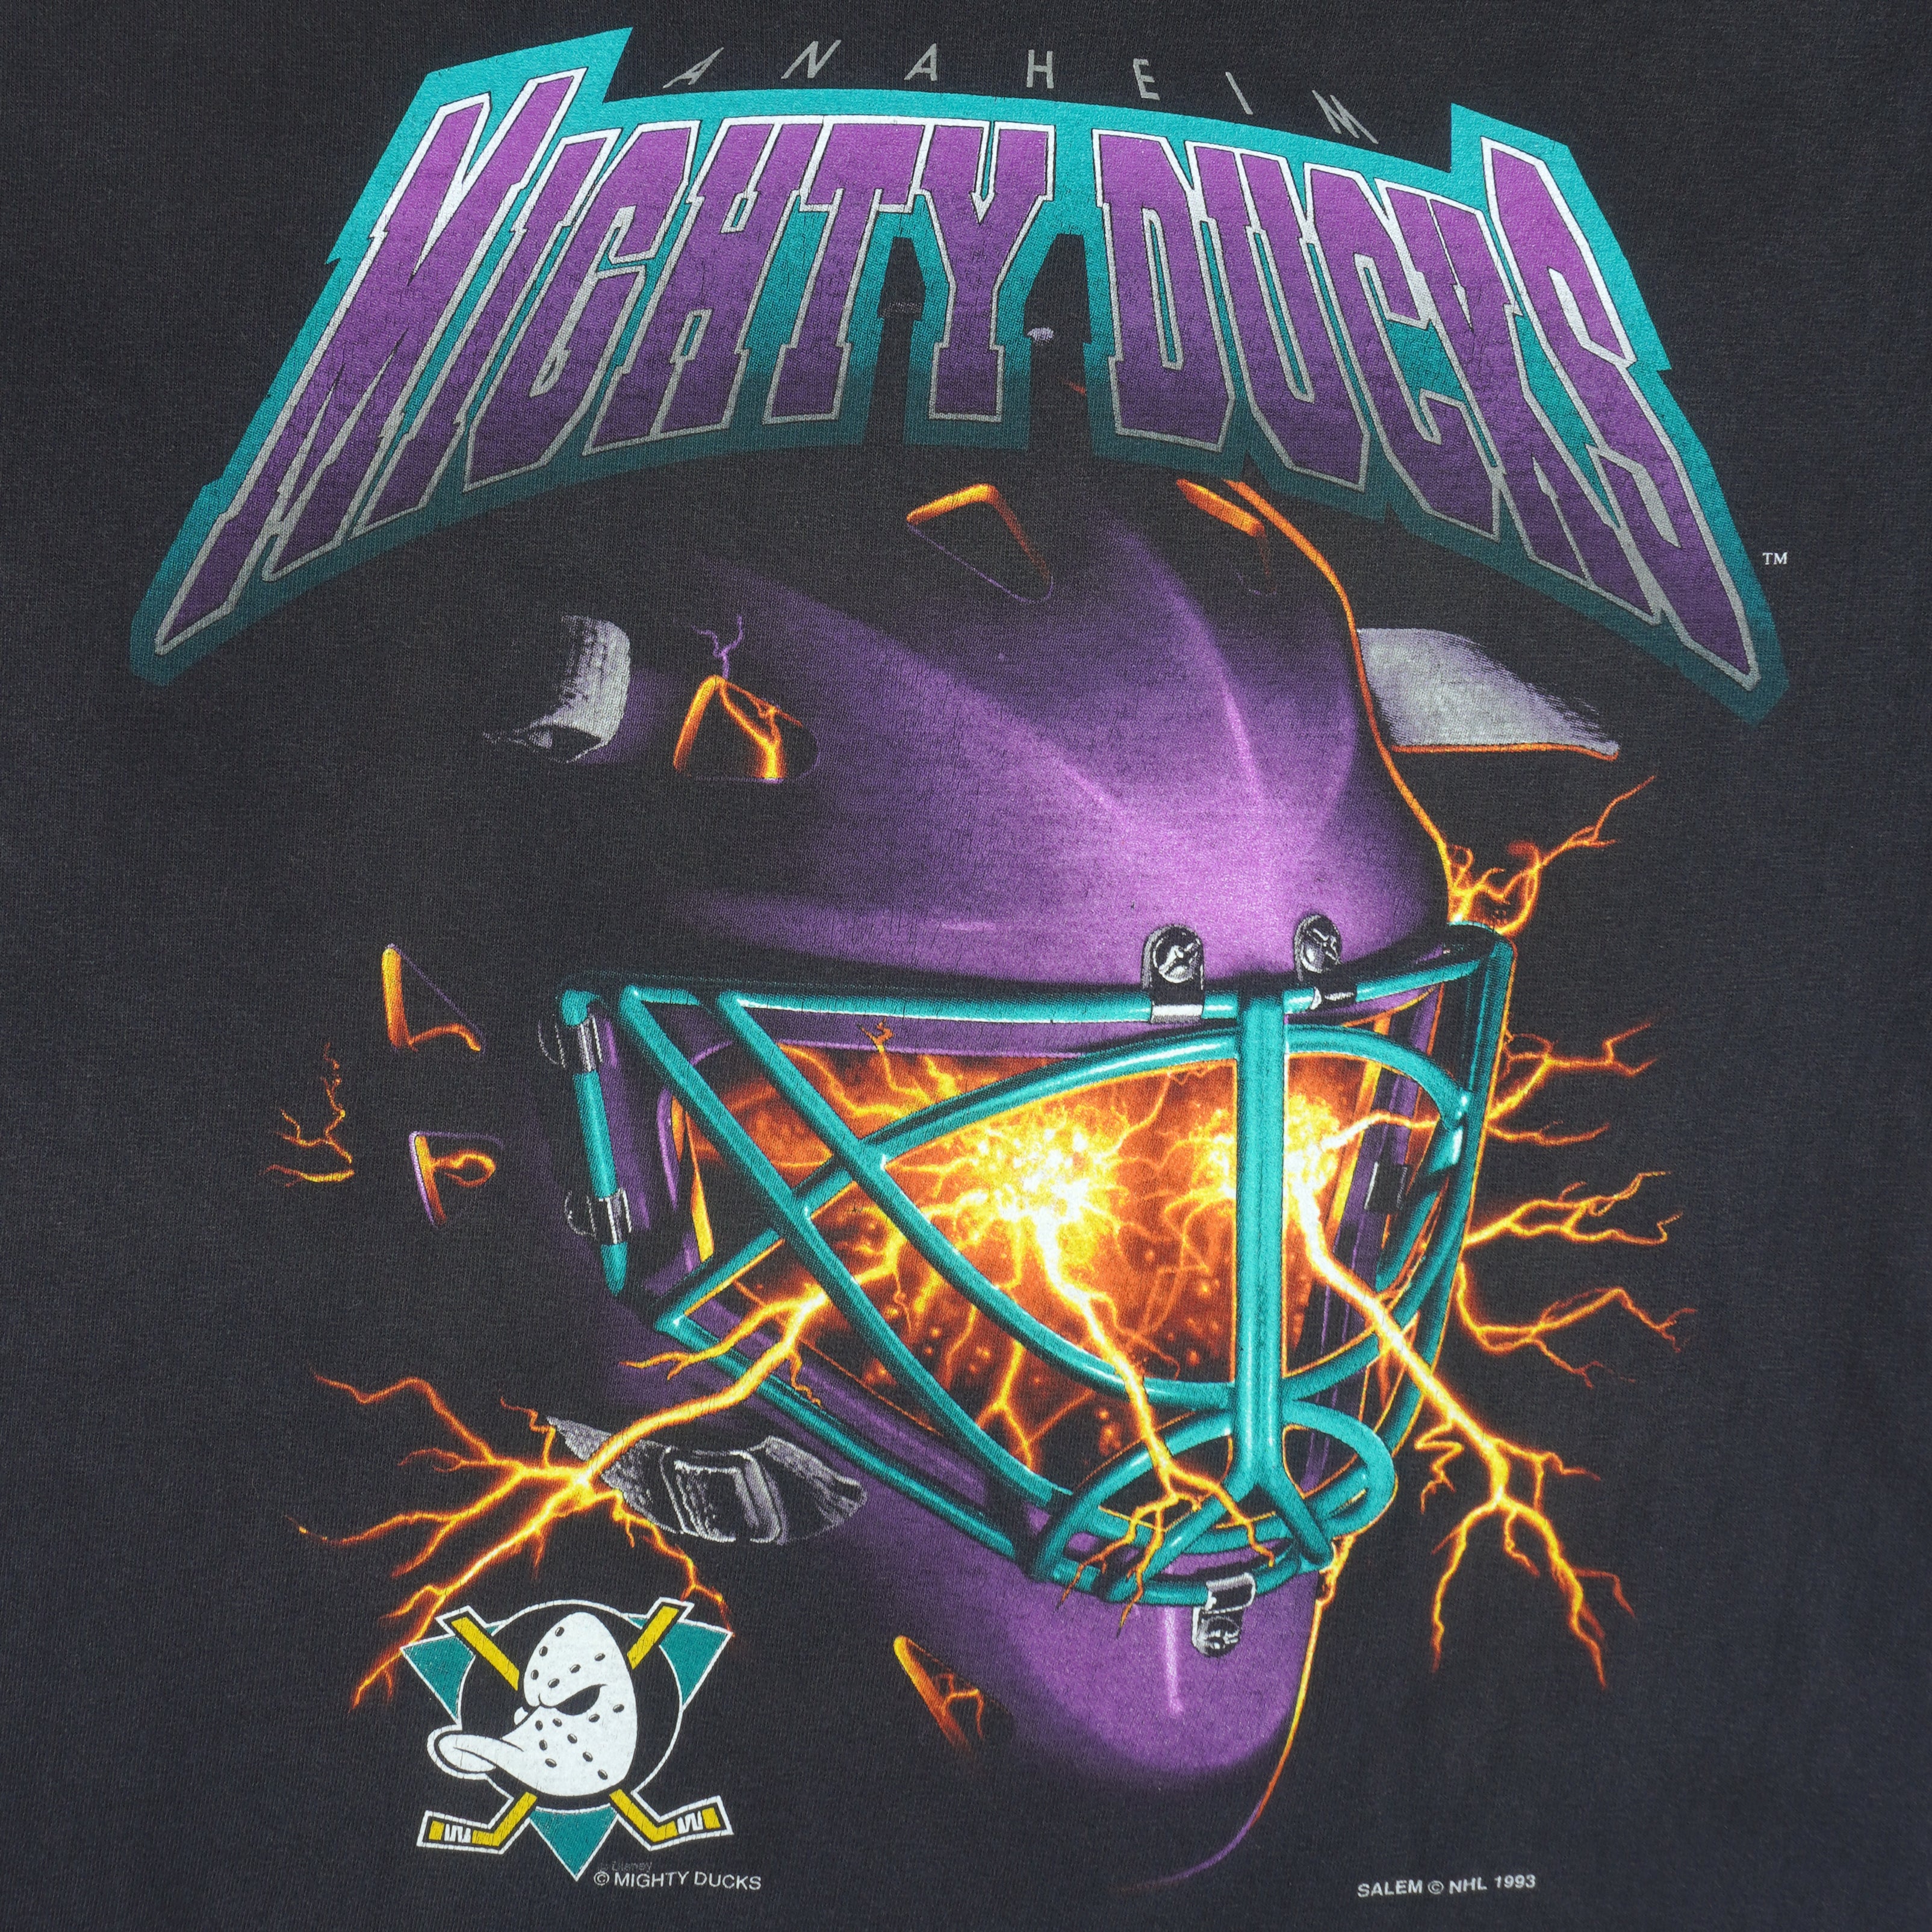 Anaheim Mighty Ducks Jerseys - 1990 Home Custom NHL Throwback Jersey